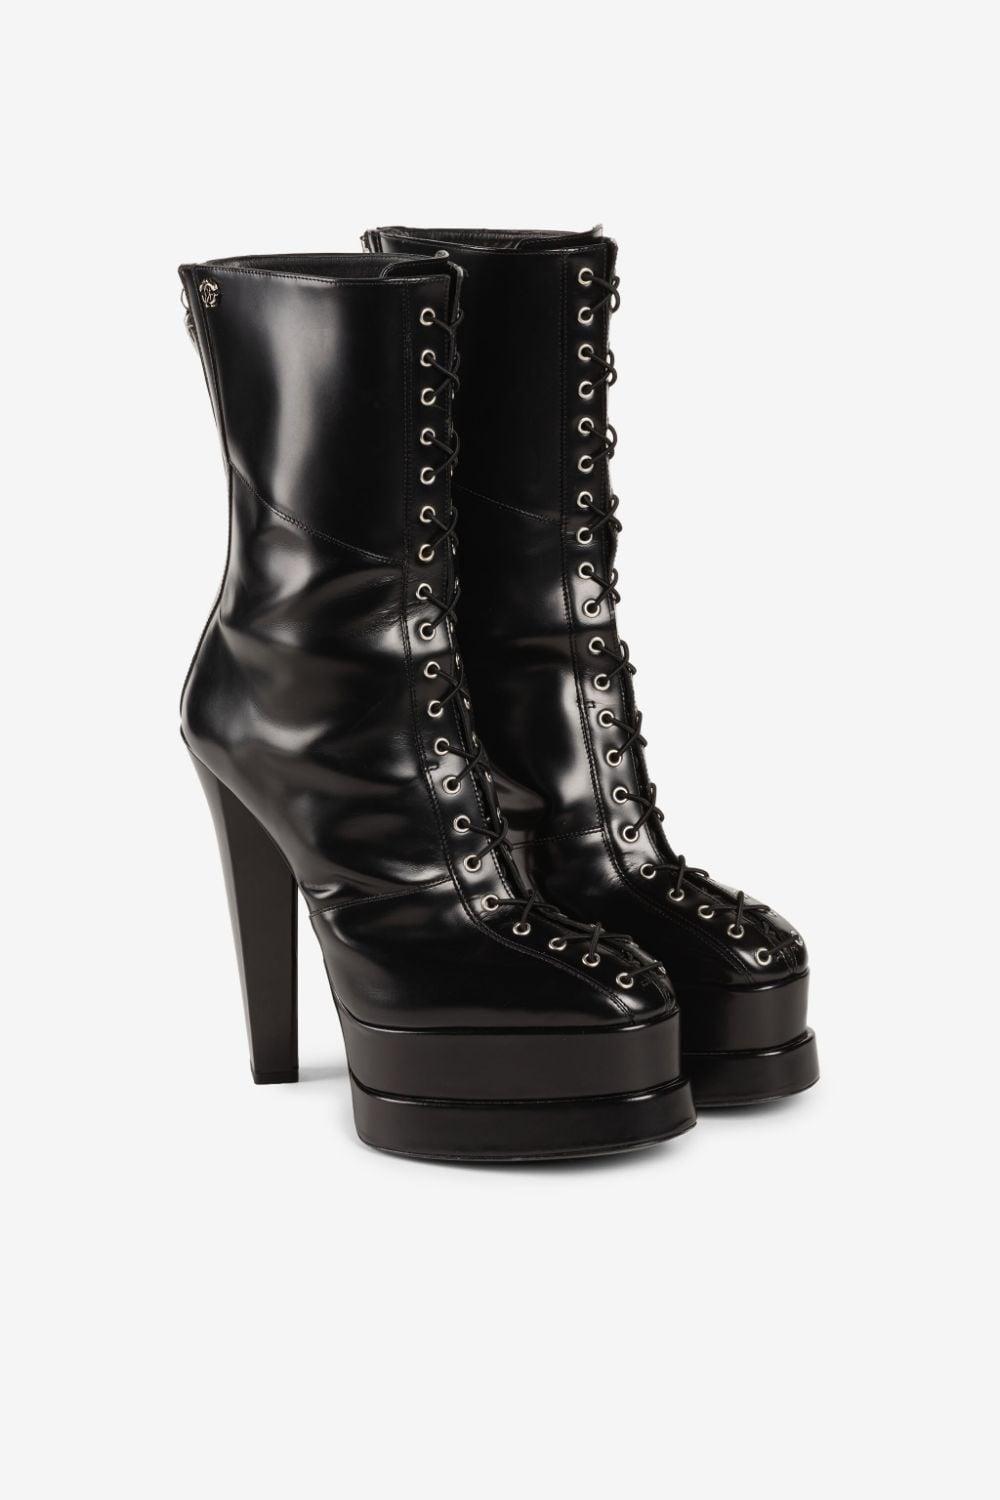 Roberto Cavalli Lace-up Platform Boots in Black | Lyst